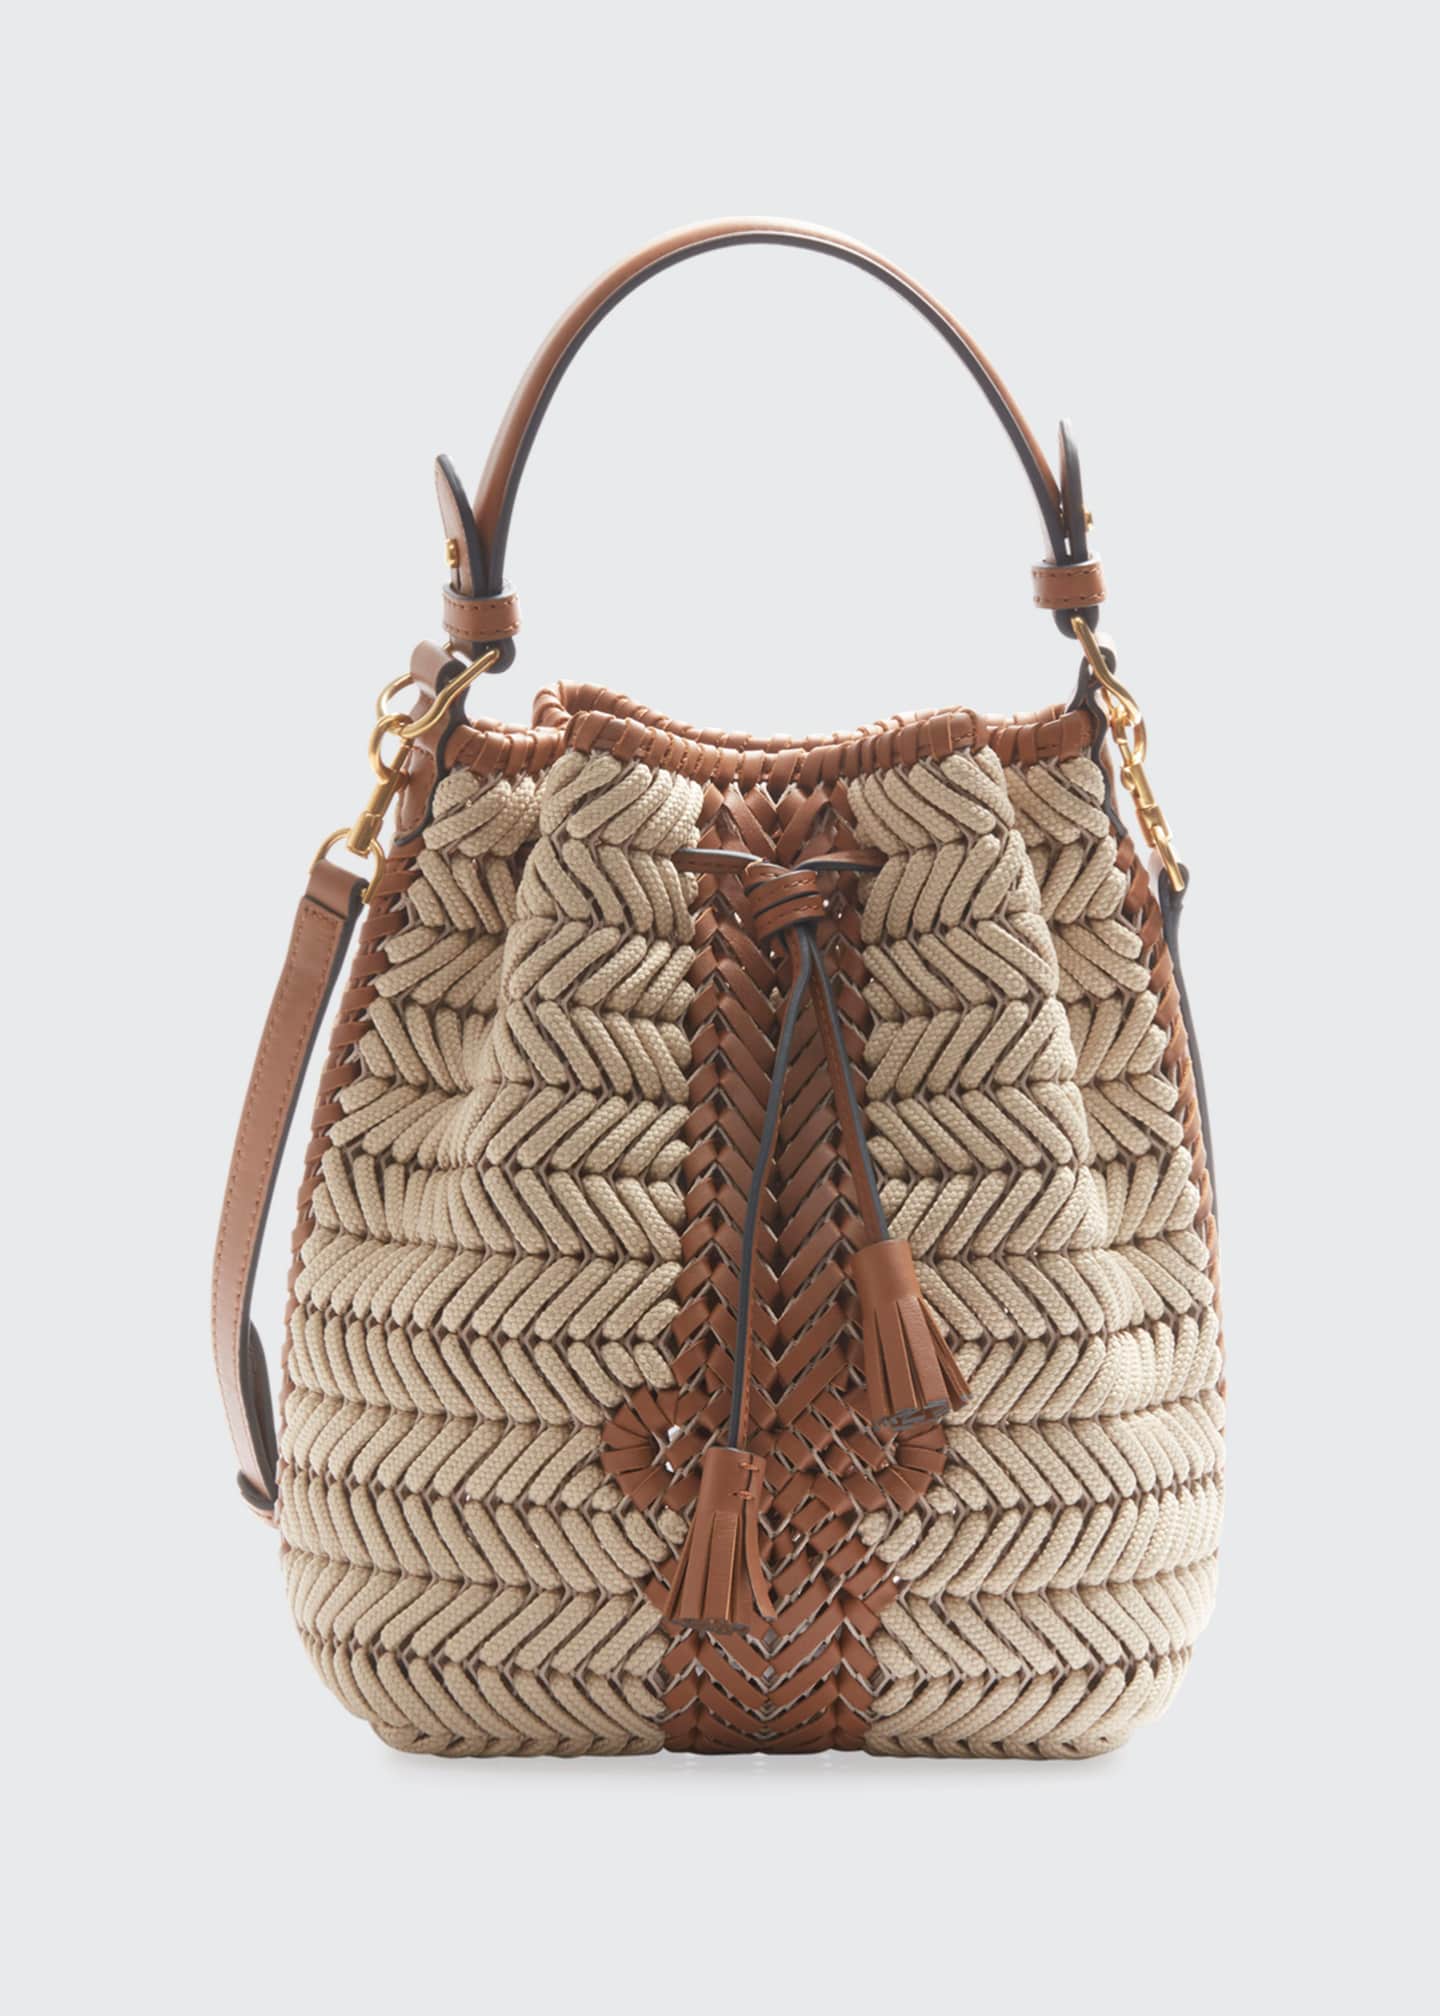 Designer Handbags on Sale at Bergdorf Goodman